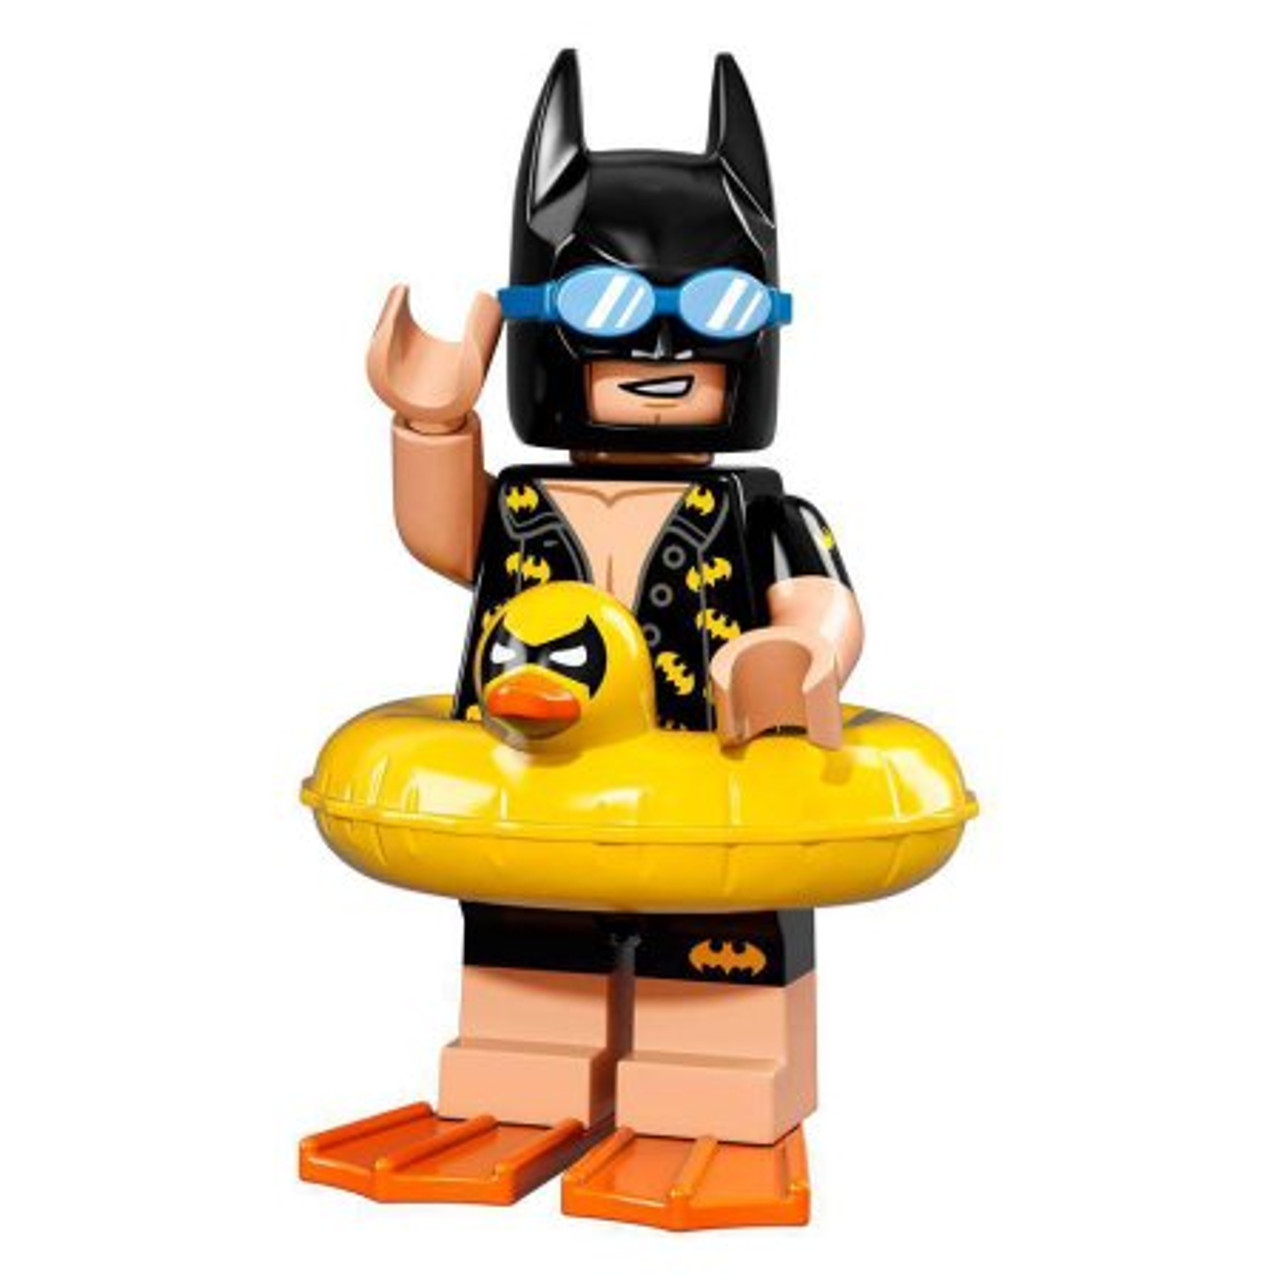 LEGO® Batman Minifigure Series 2 - Vacation Batgirl - The Brick People